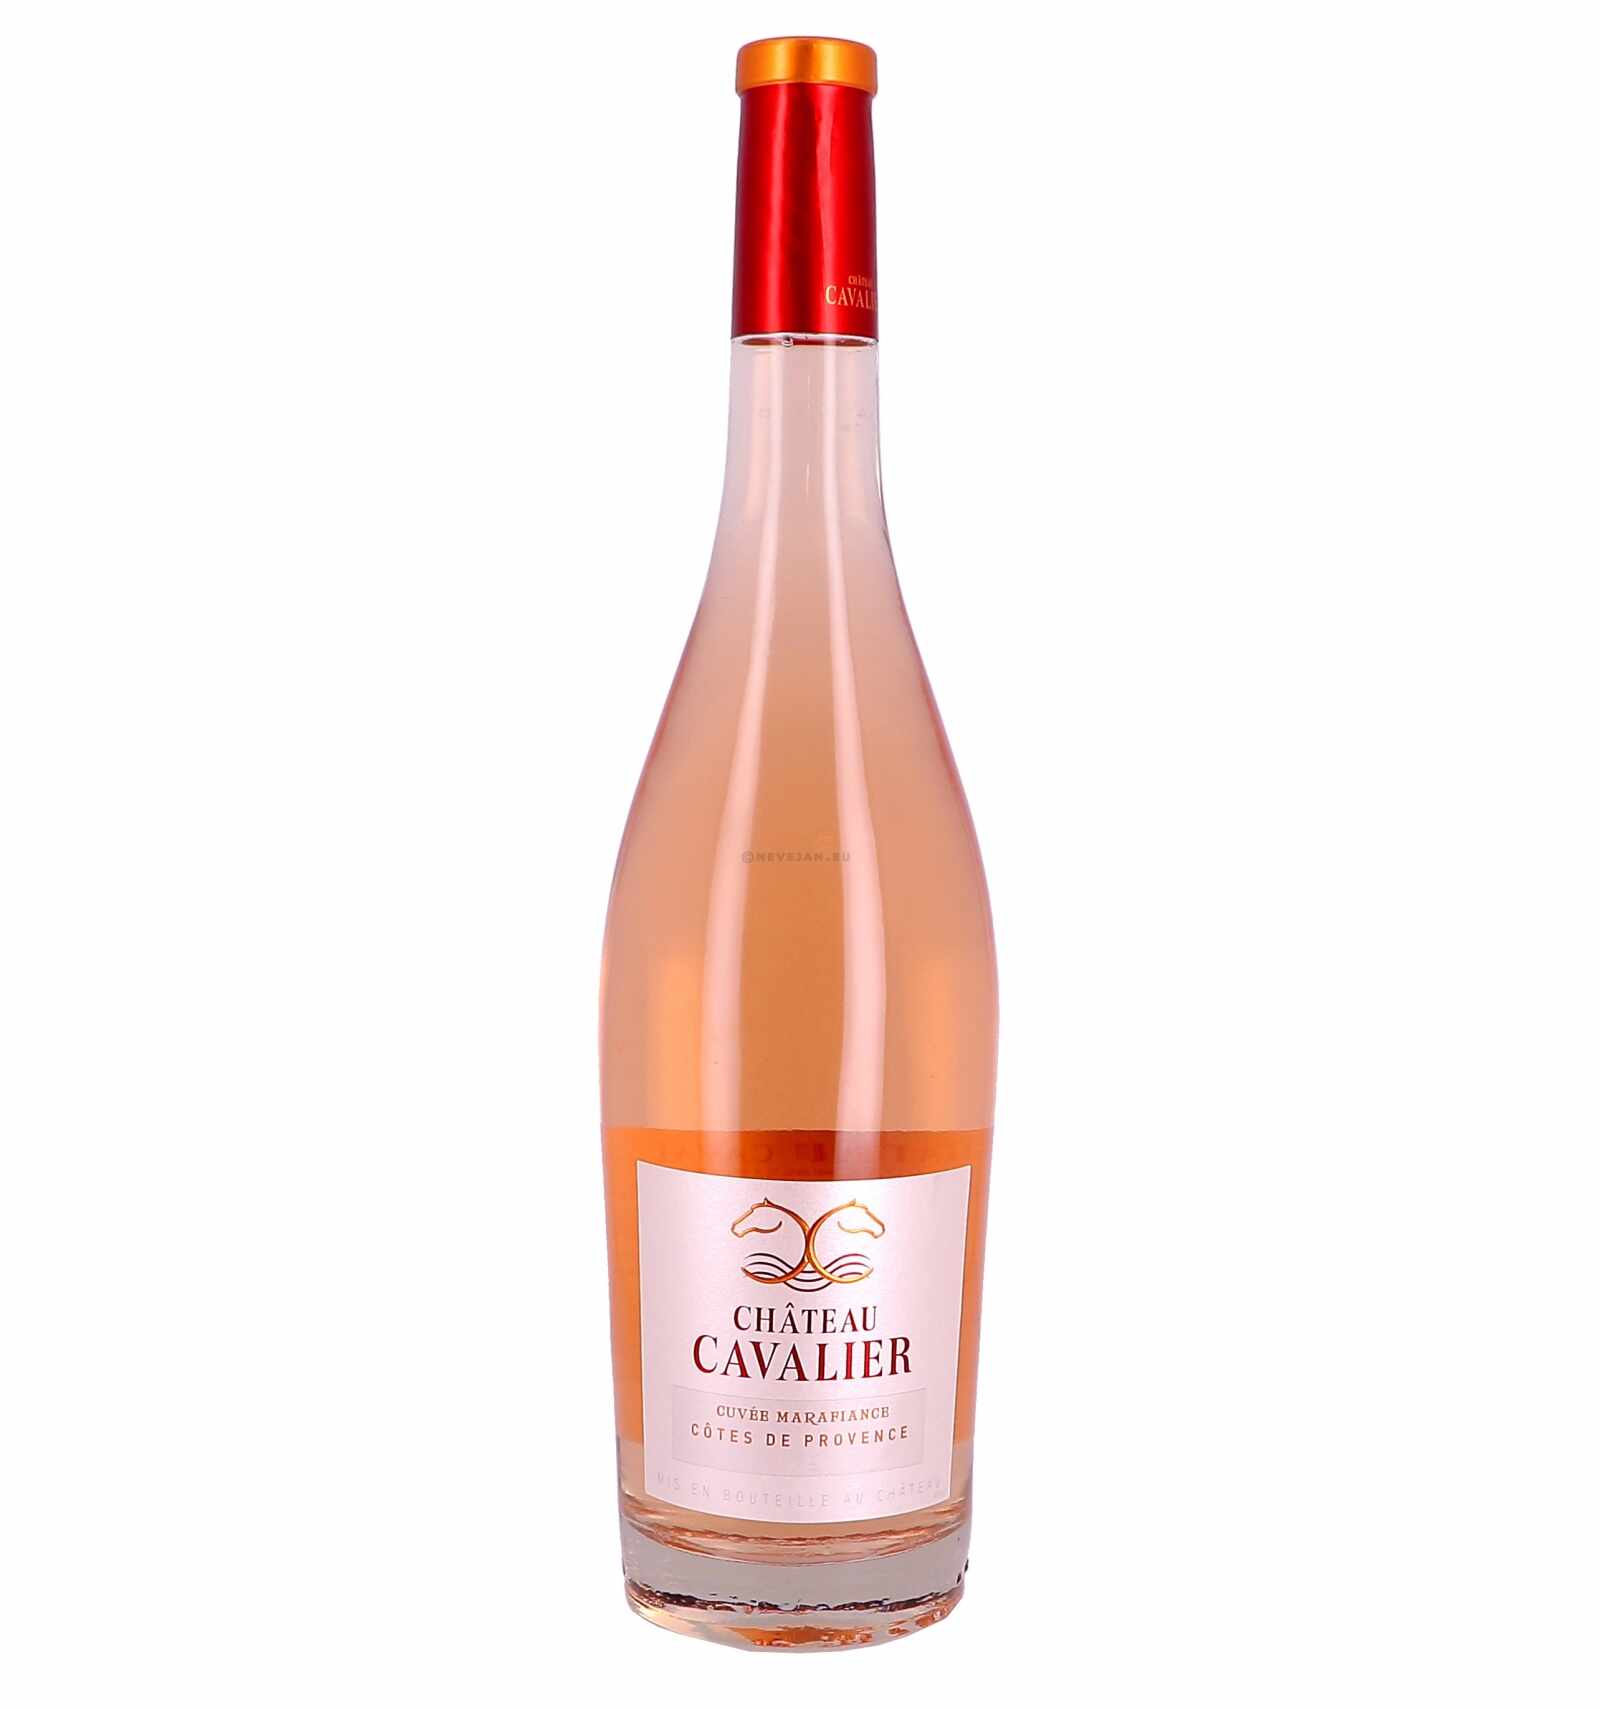 Vin roze sec, Chateau Cavalier CuvÃ©e Marafiance, CÃ´tes de Provence, 12.5% alc., 3L, Franta